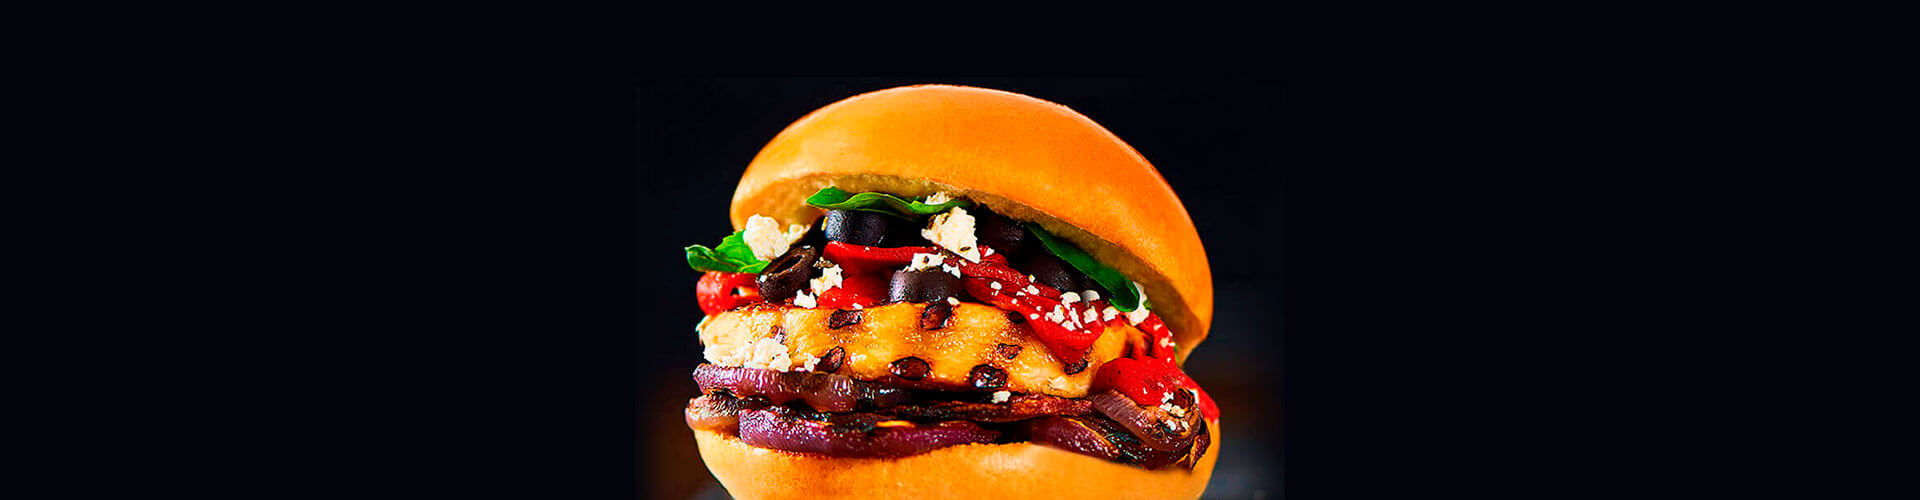 Mediterranean Inspired Burger